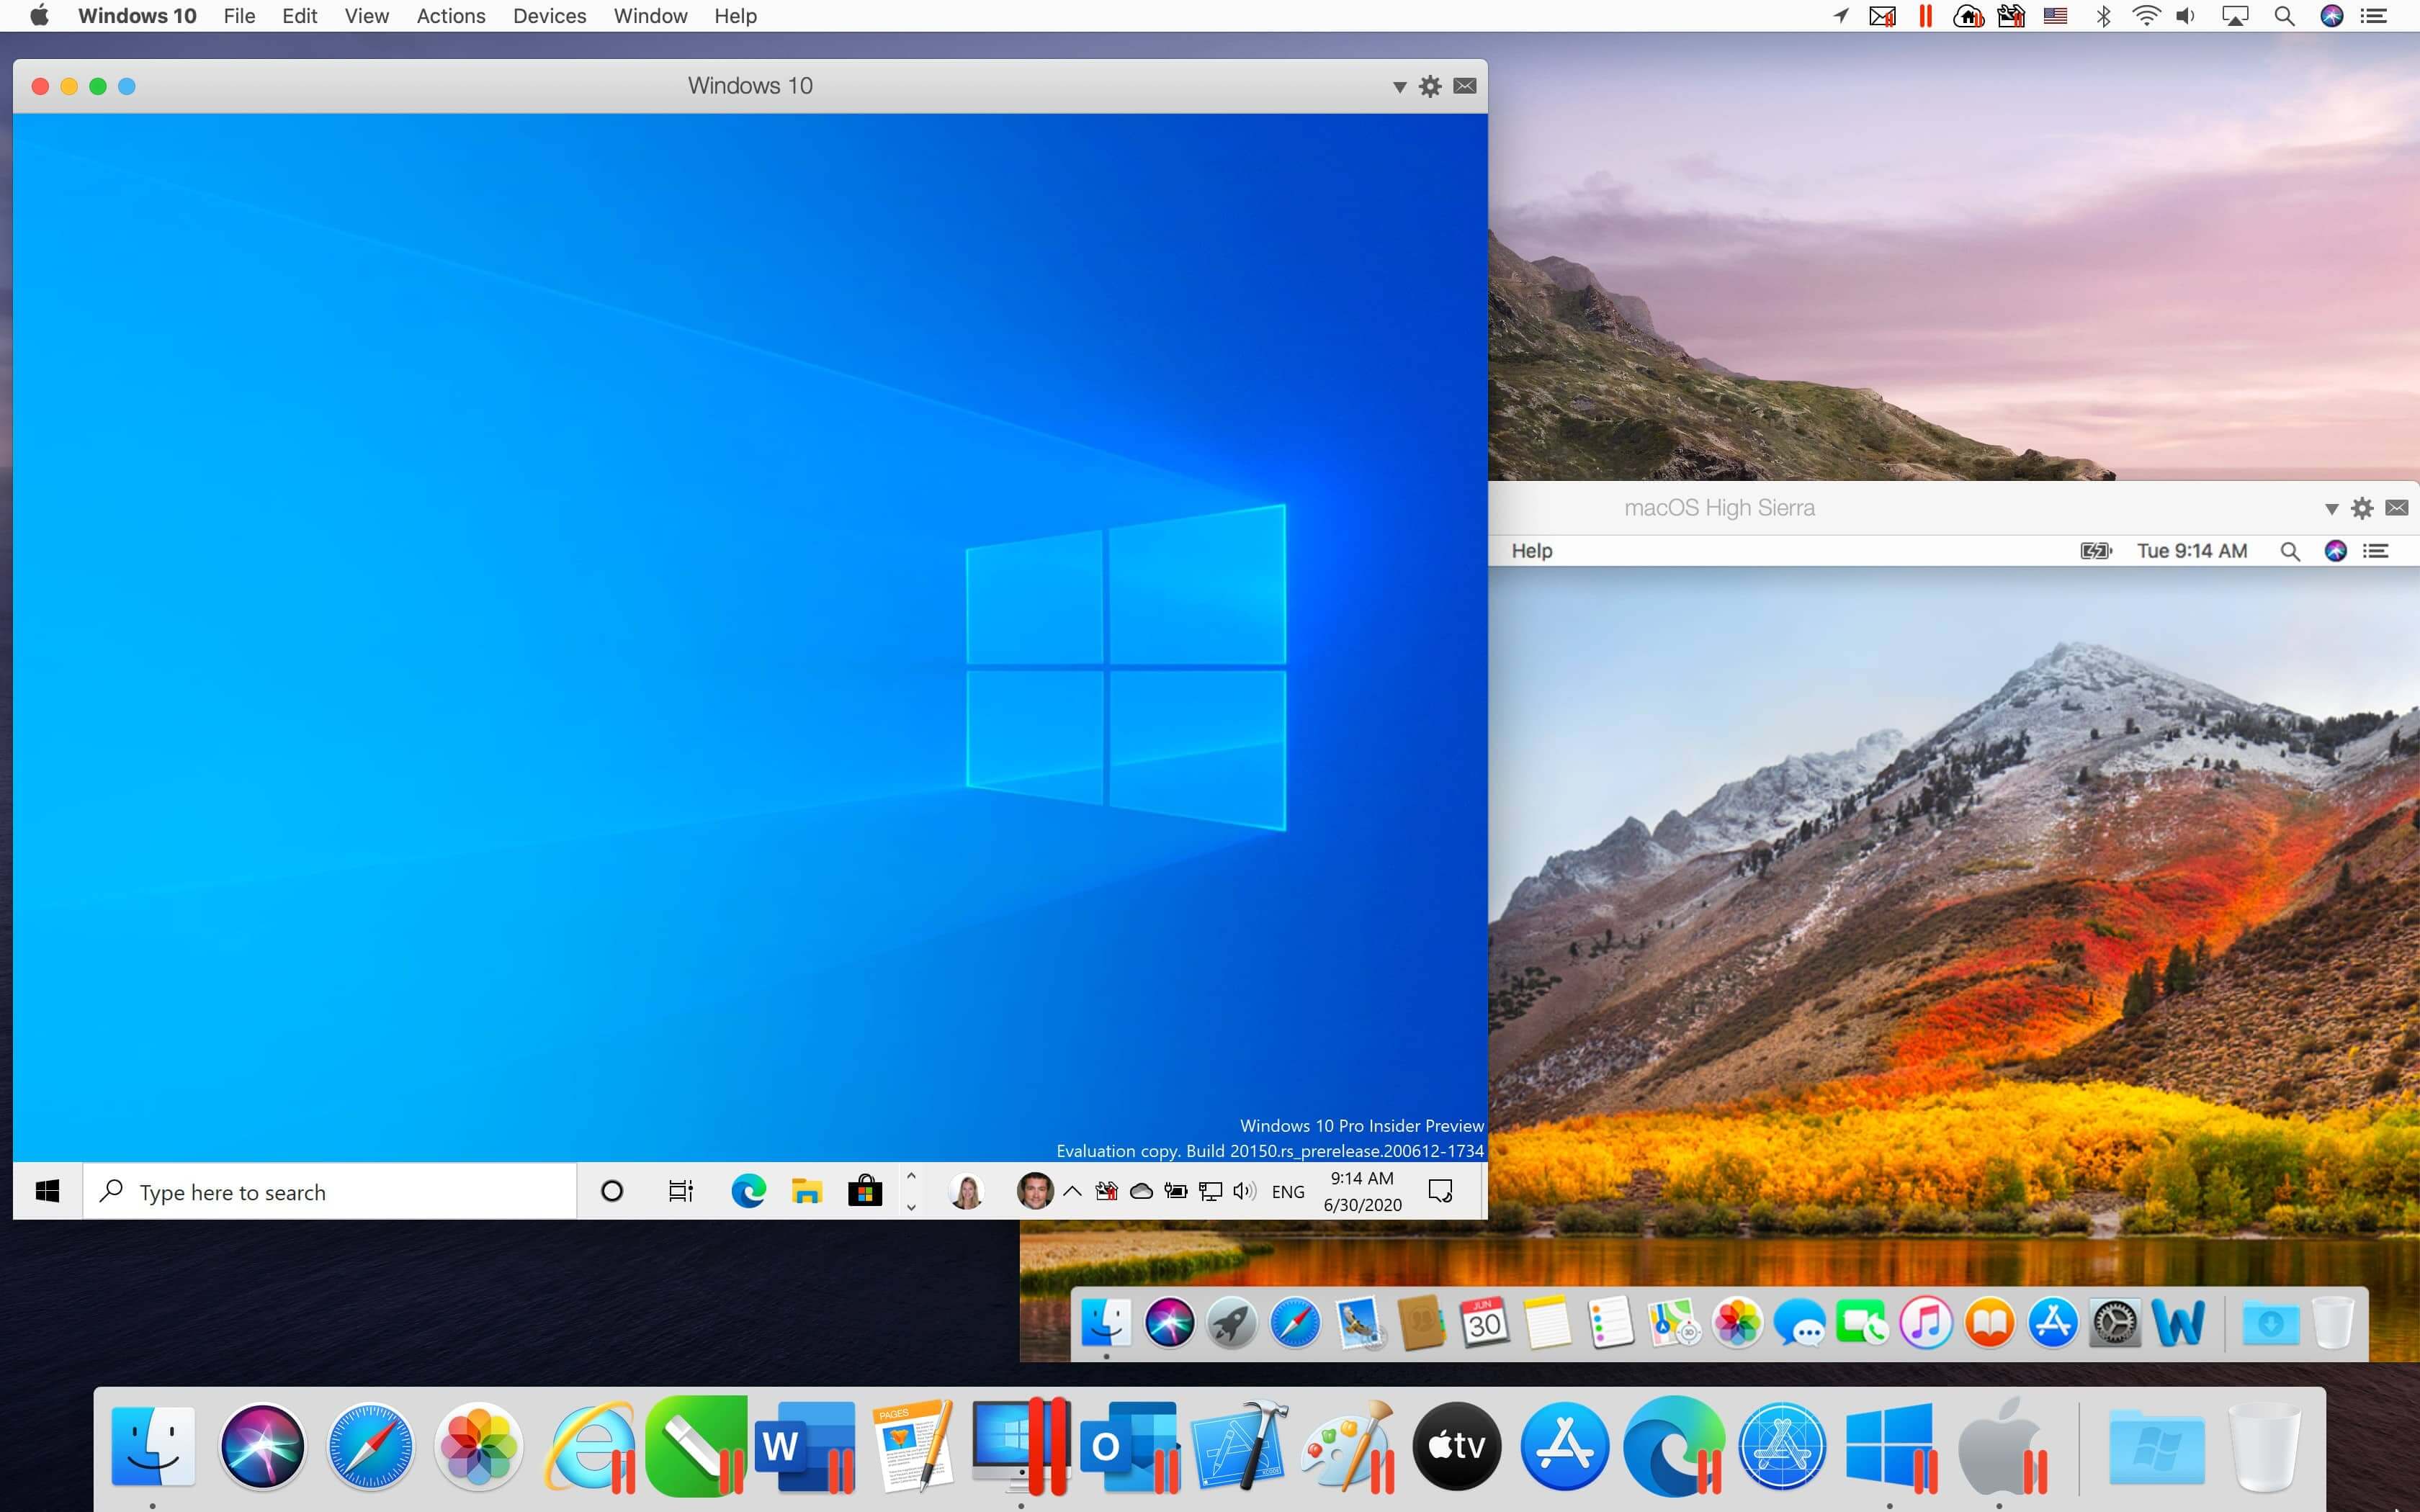 parallels desktop 13 windows 7